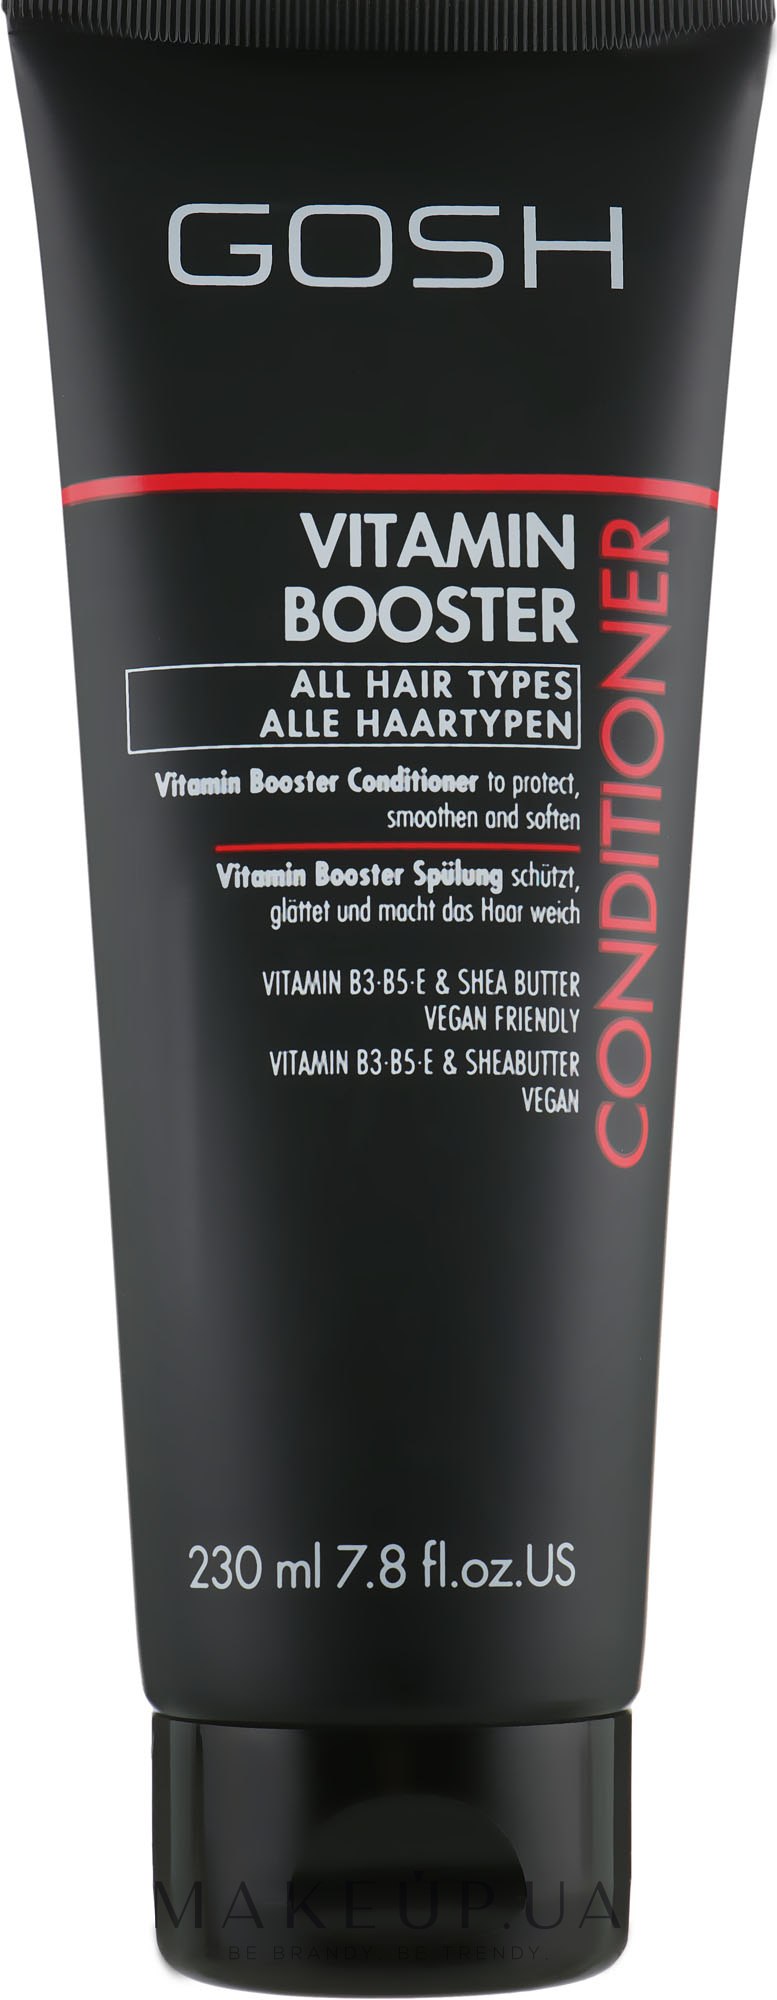 Кондиционер для волос - Gosh Copenhagen Vitamin Booster Conditioner — фото 230ml